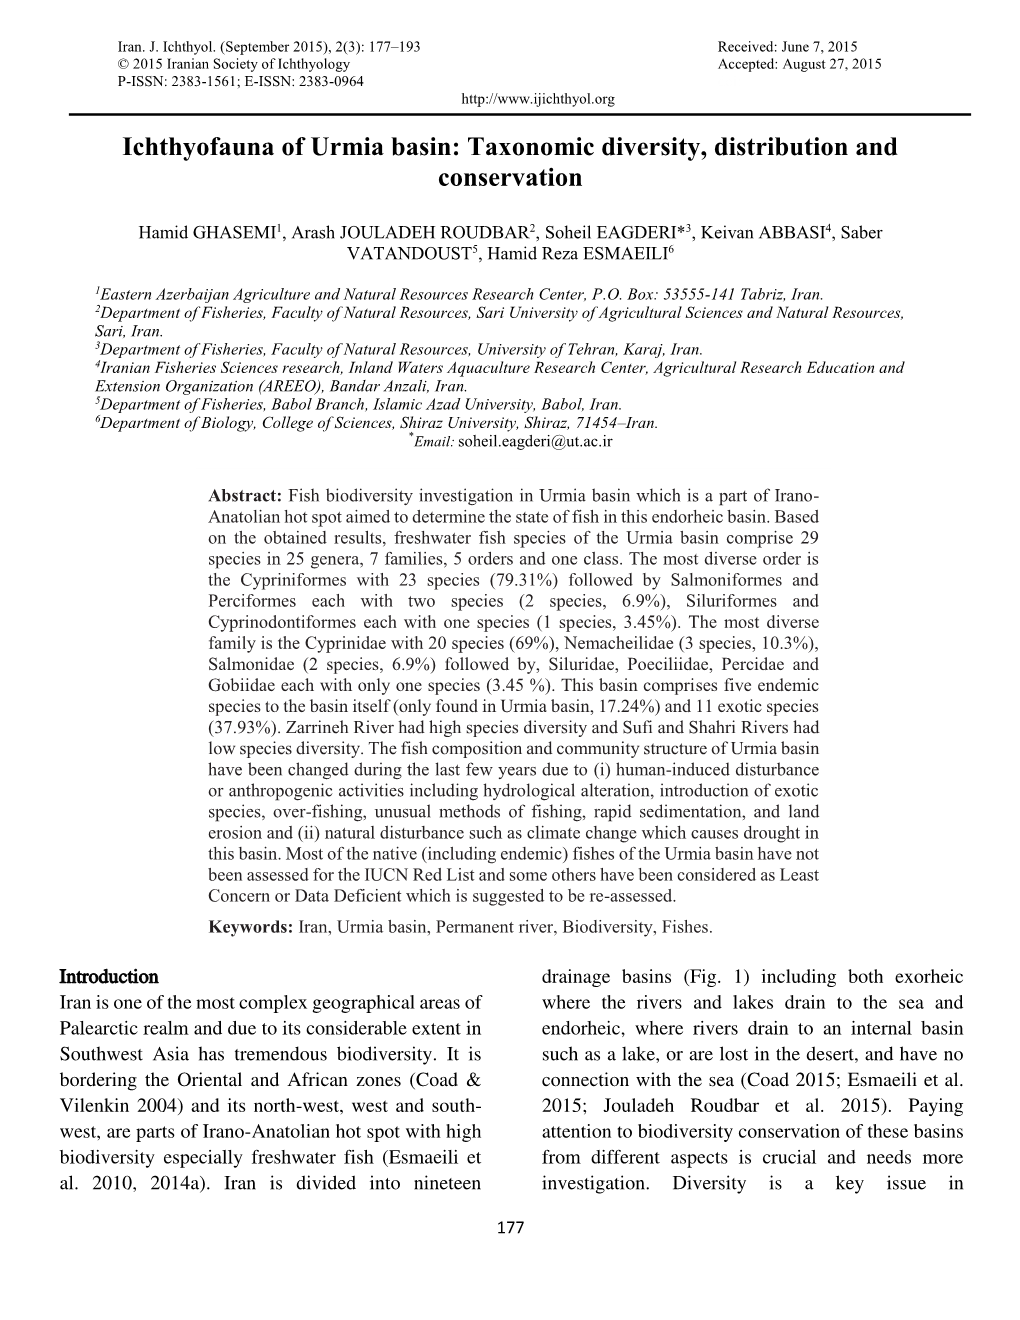 Ichthyofauna of Urmia Basin: Taxonomic Diversity, Distribution and Conservation